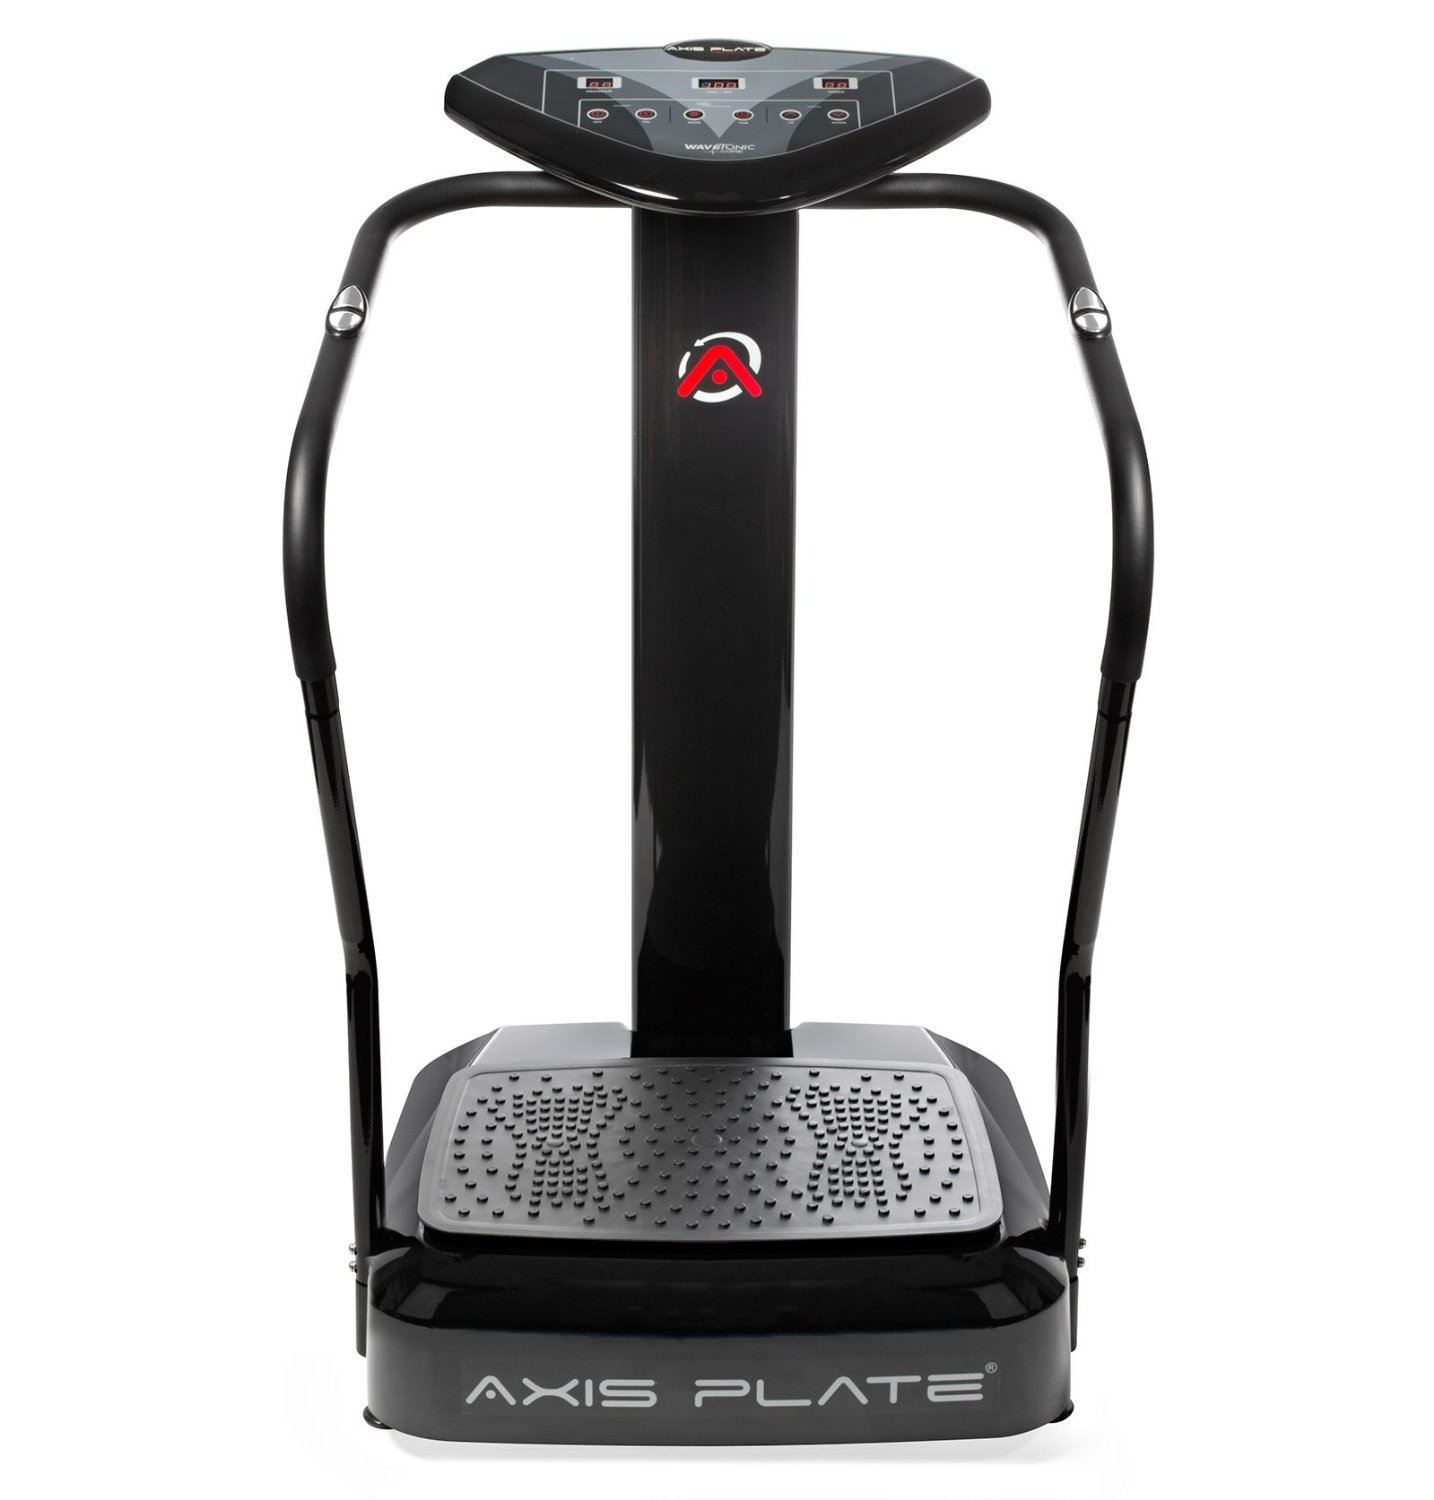 Axis-Plate Vibration Pro Whole Body Exercise Platform Machine